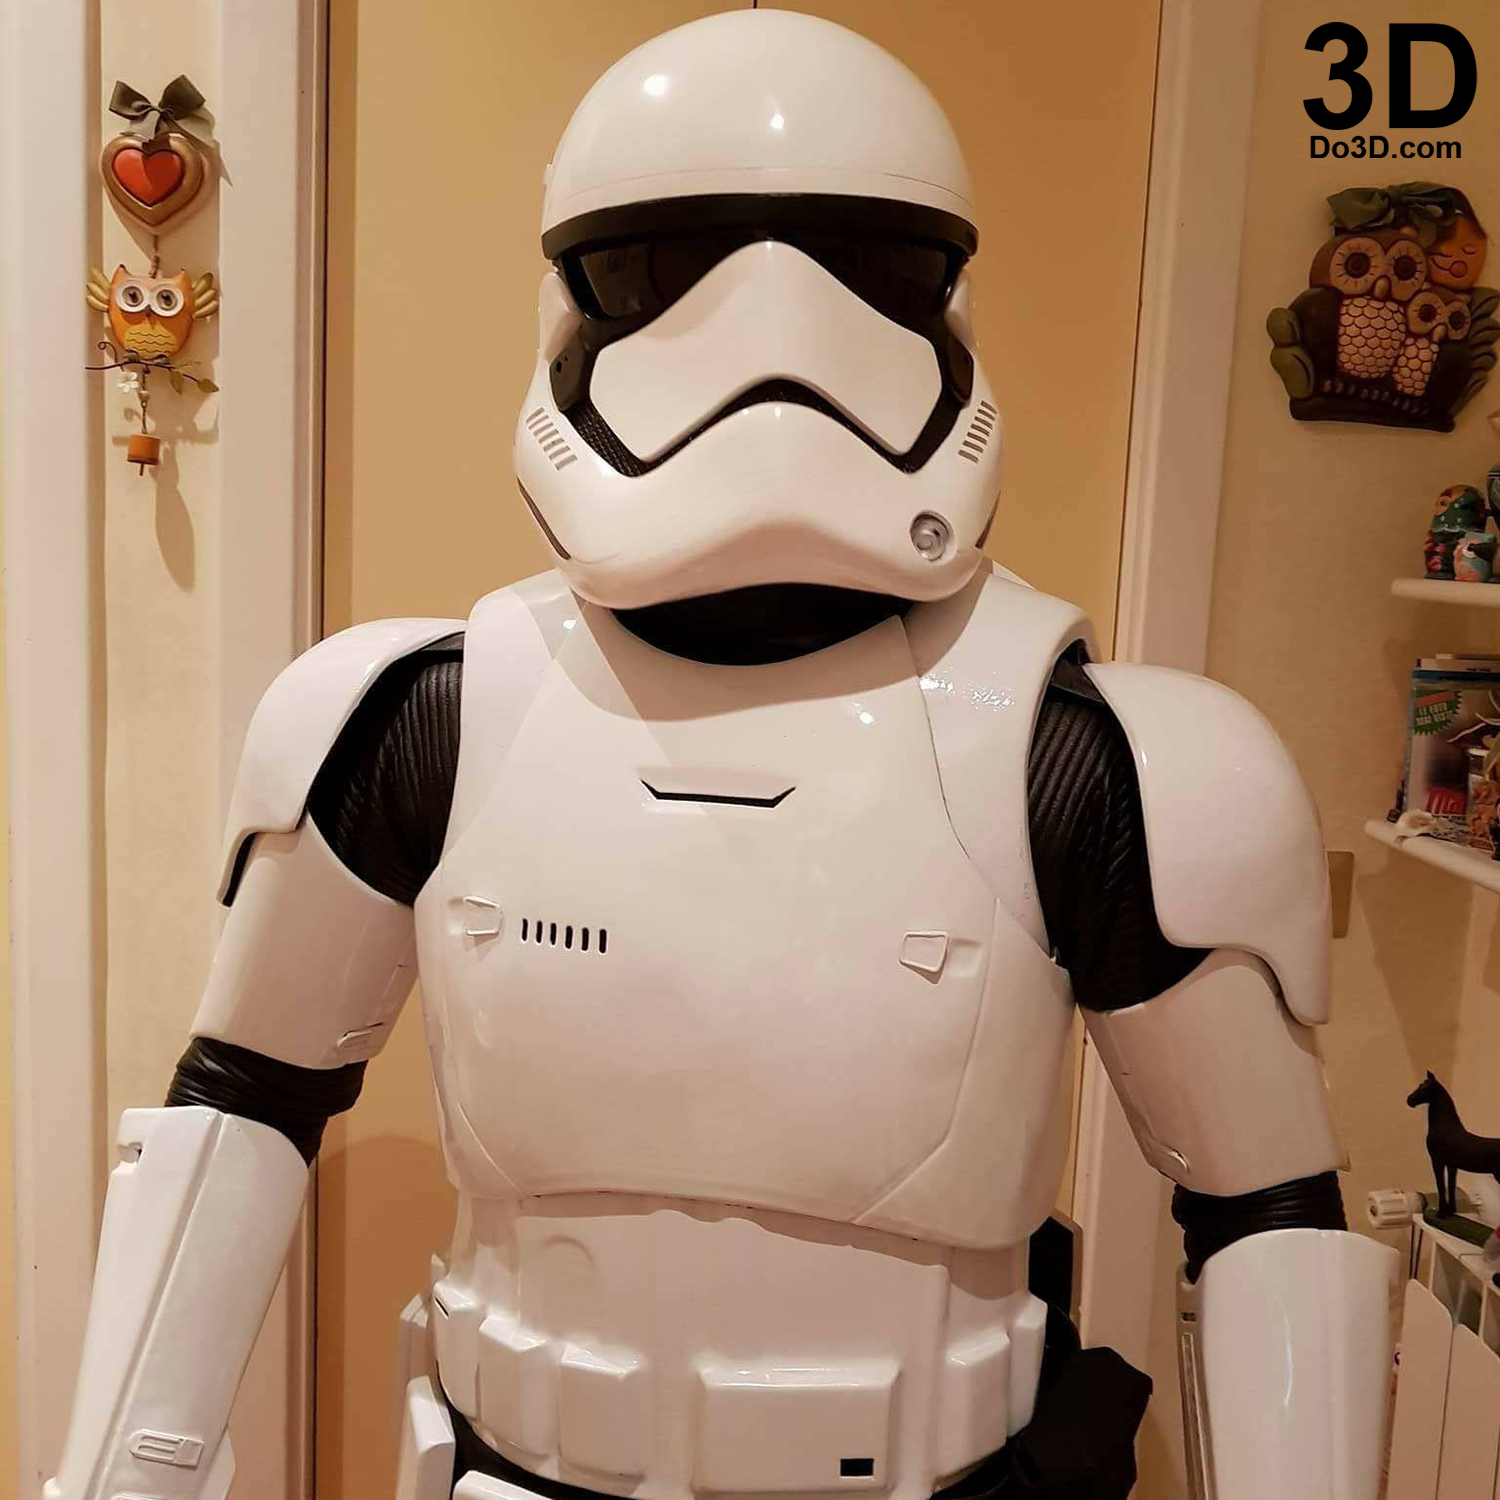 3D Printable Model of Stormtrooper First Order Costume